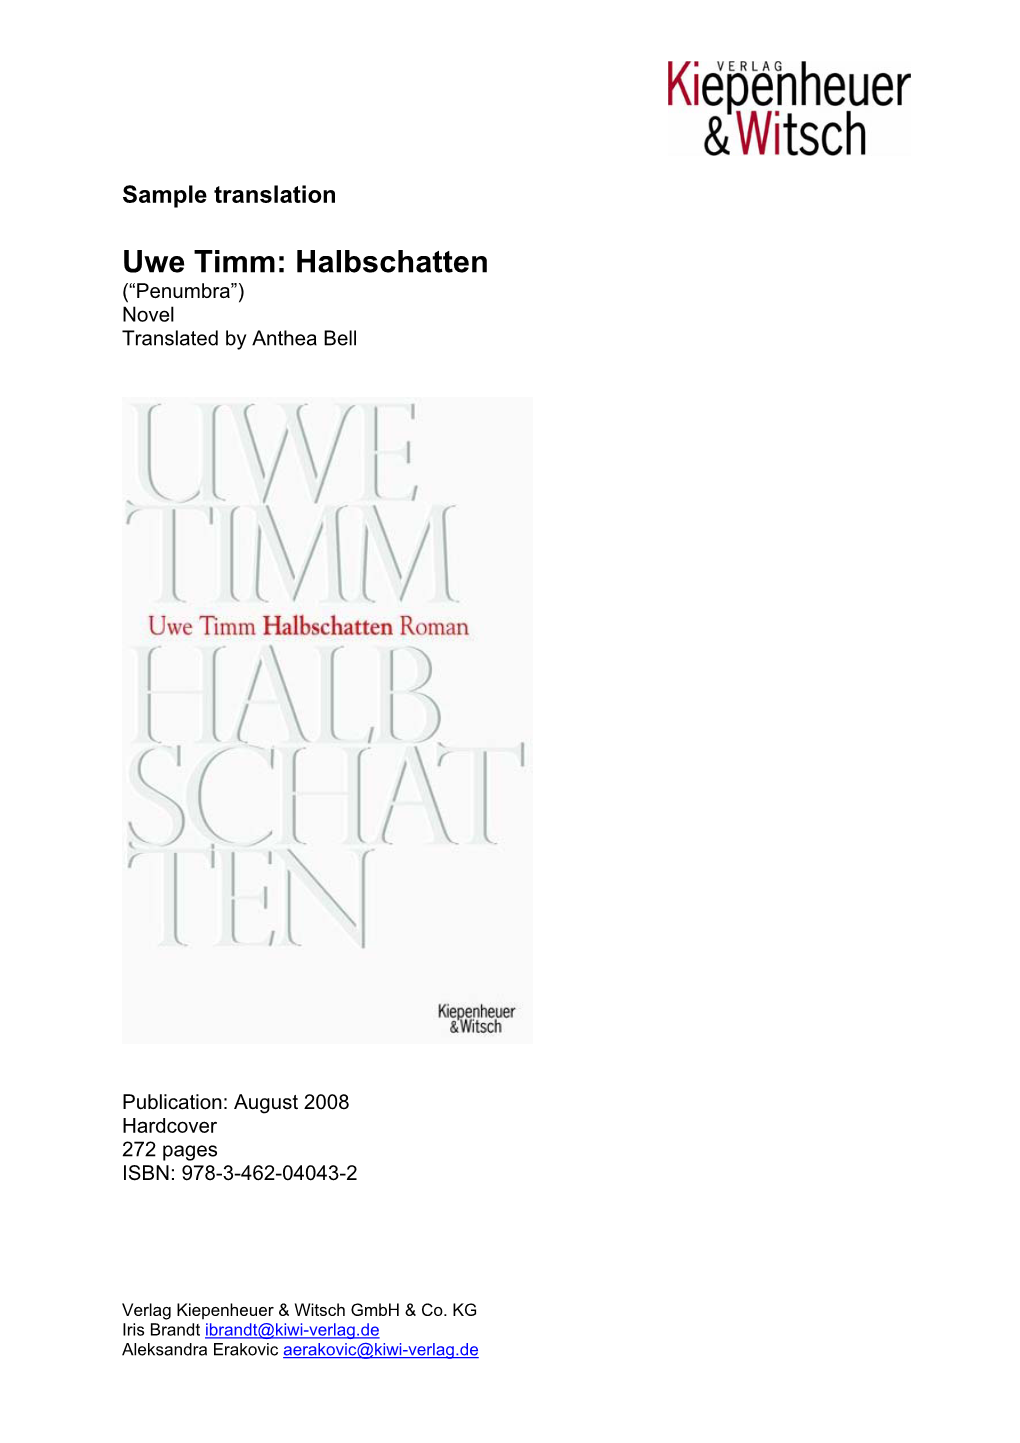 Uwe Timm: Halbschatten (“Penumbra”) Novel Translated by Anthea Bell